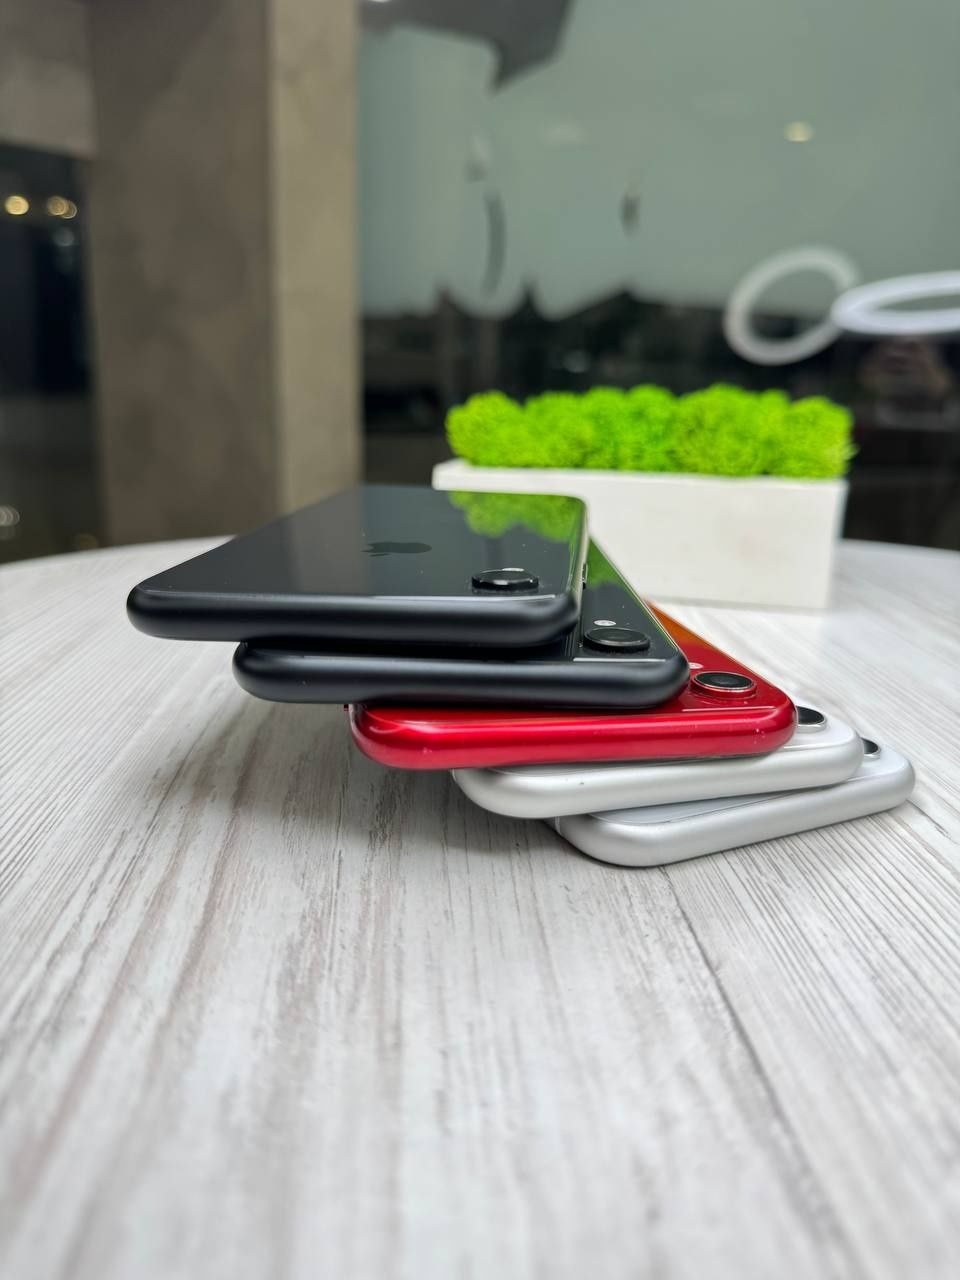 Apple iphone xr 64/128 gb black white red neverlock айфон хр XR 64